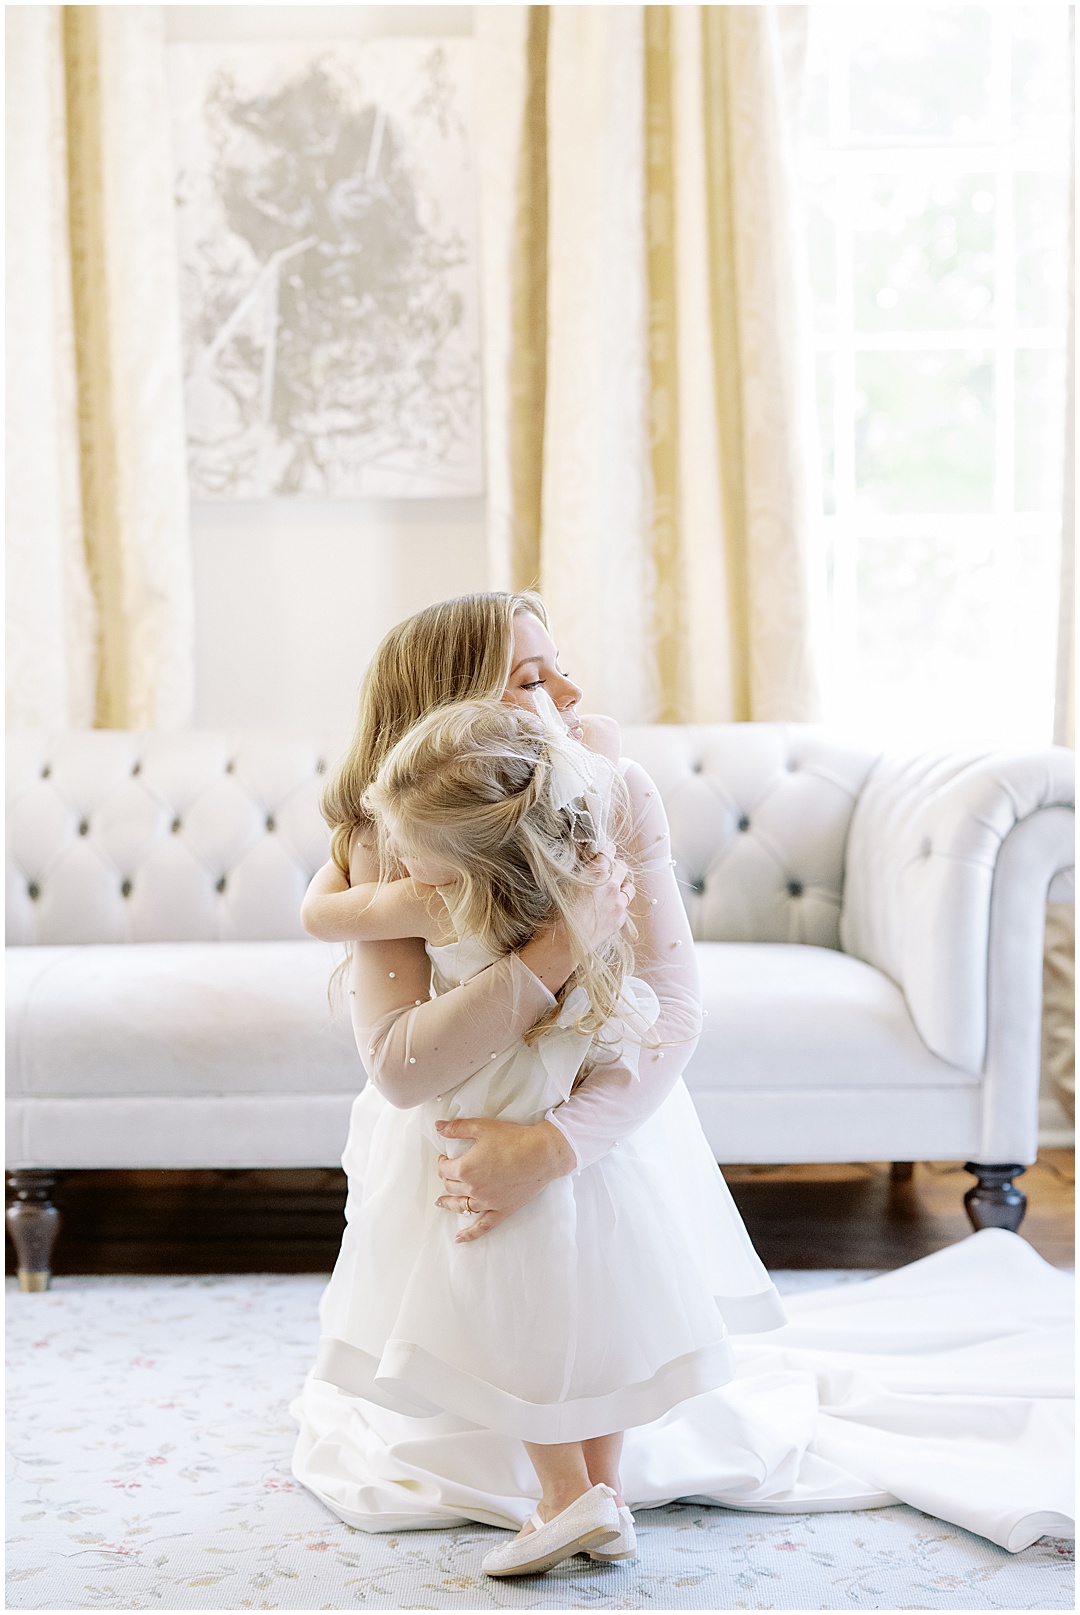 bride and flower girl hugging